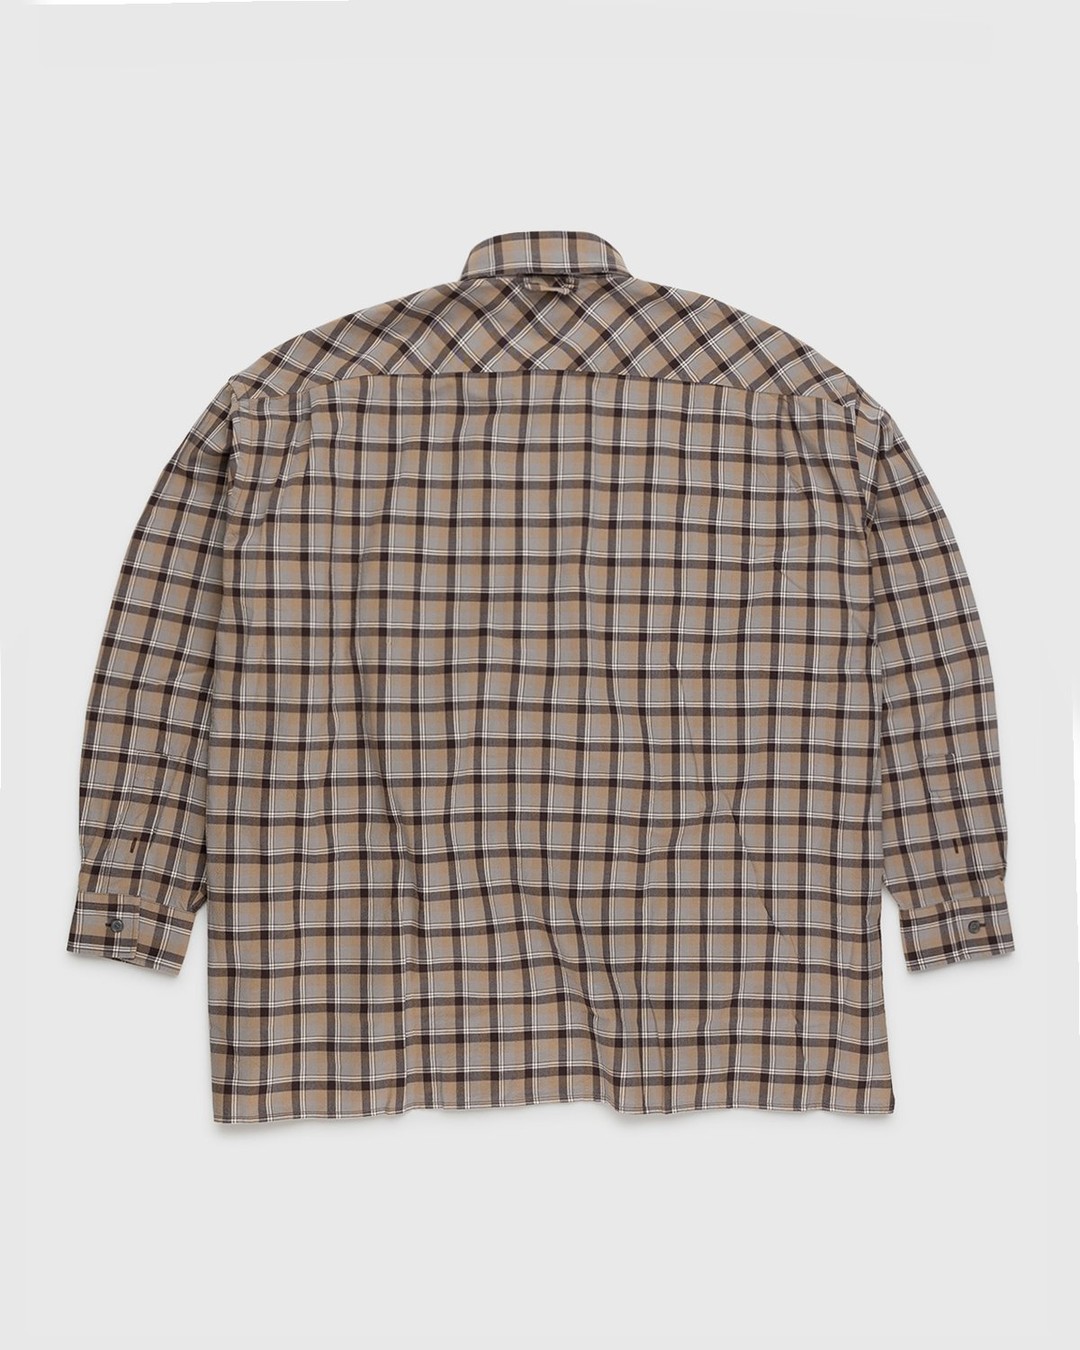 Acne Studios – Checked Shirt Brown - Longsleeve Shirts - Brown - Image 2